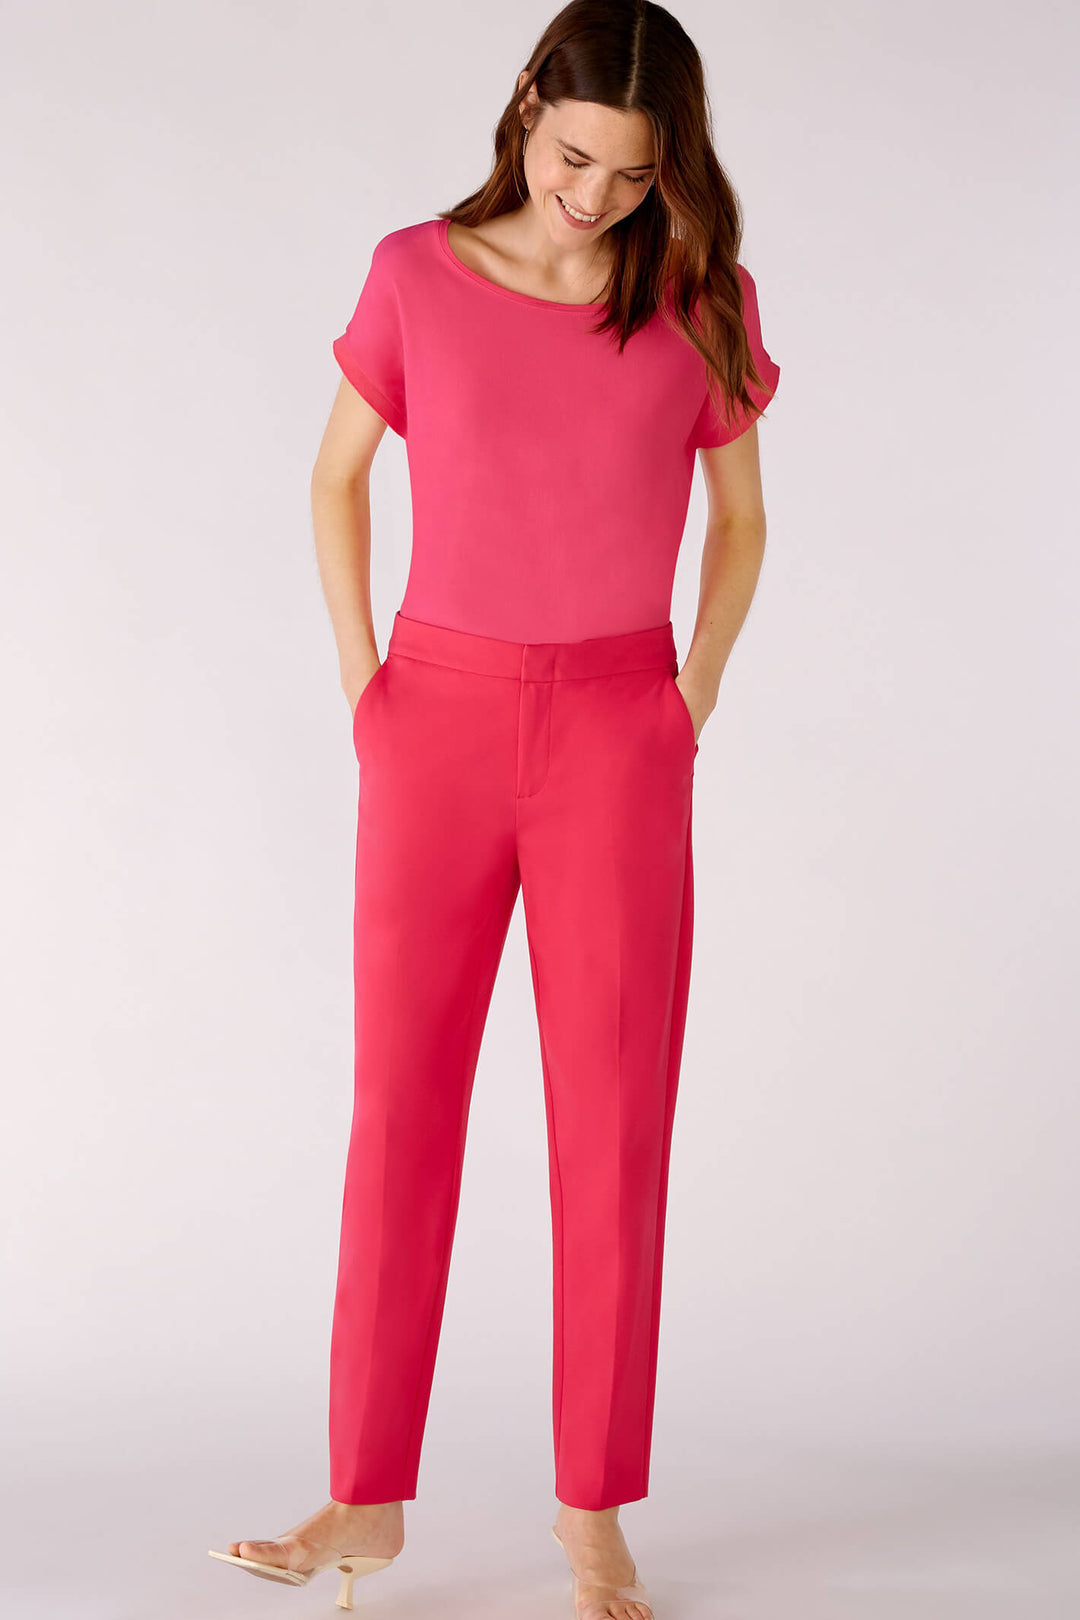 Oui 78202 Pink Trousers - Olivia Grace Fashion